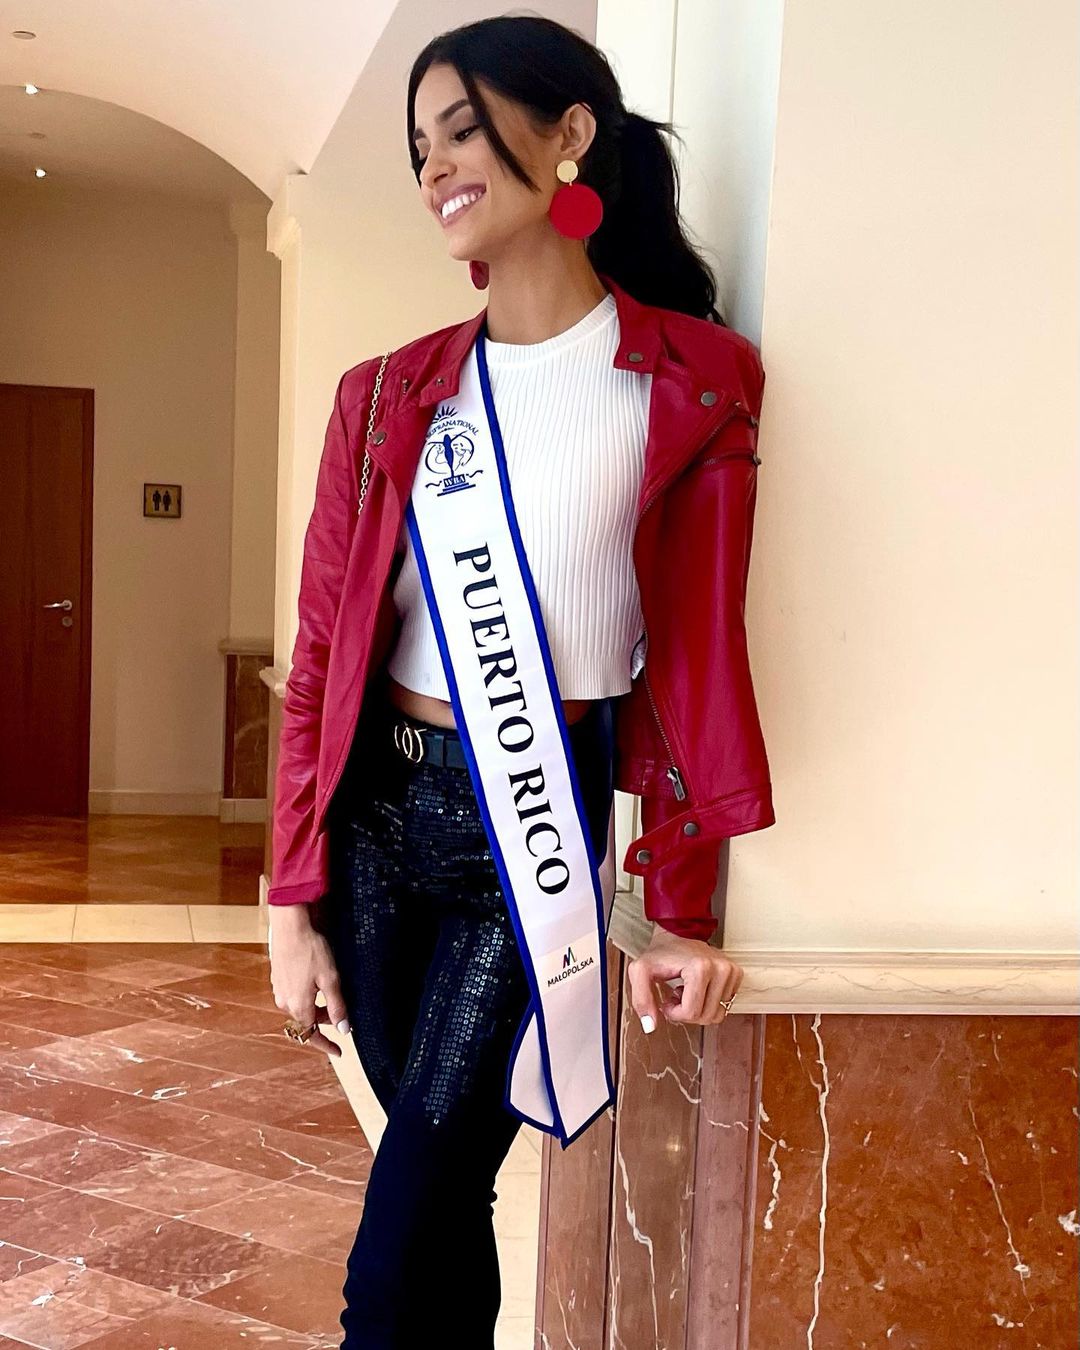 karla guilfu, top 5 de miss universe 2023/1st runner-up de miss supranational 2021. - Página 4 22944717